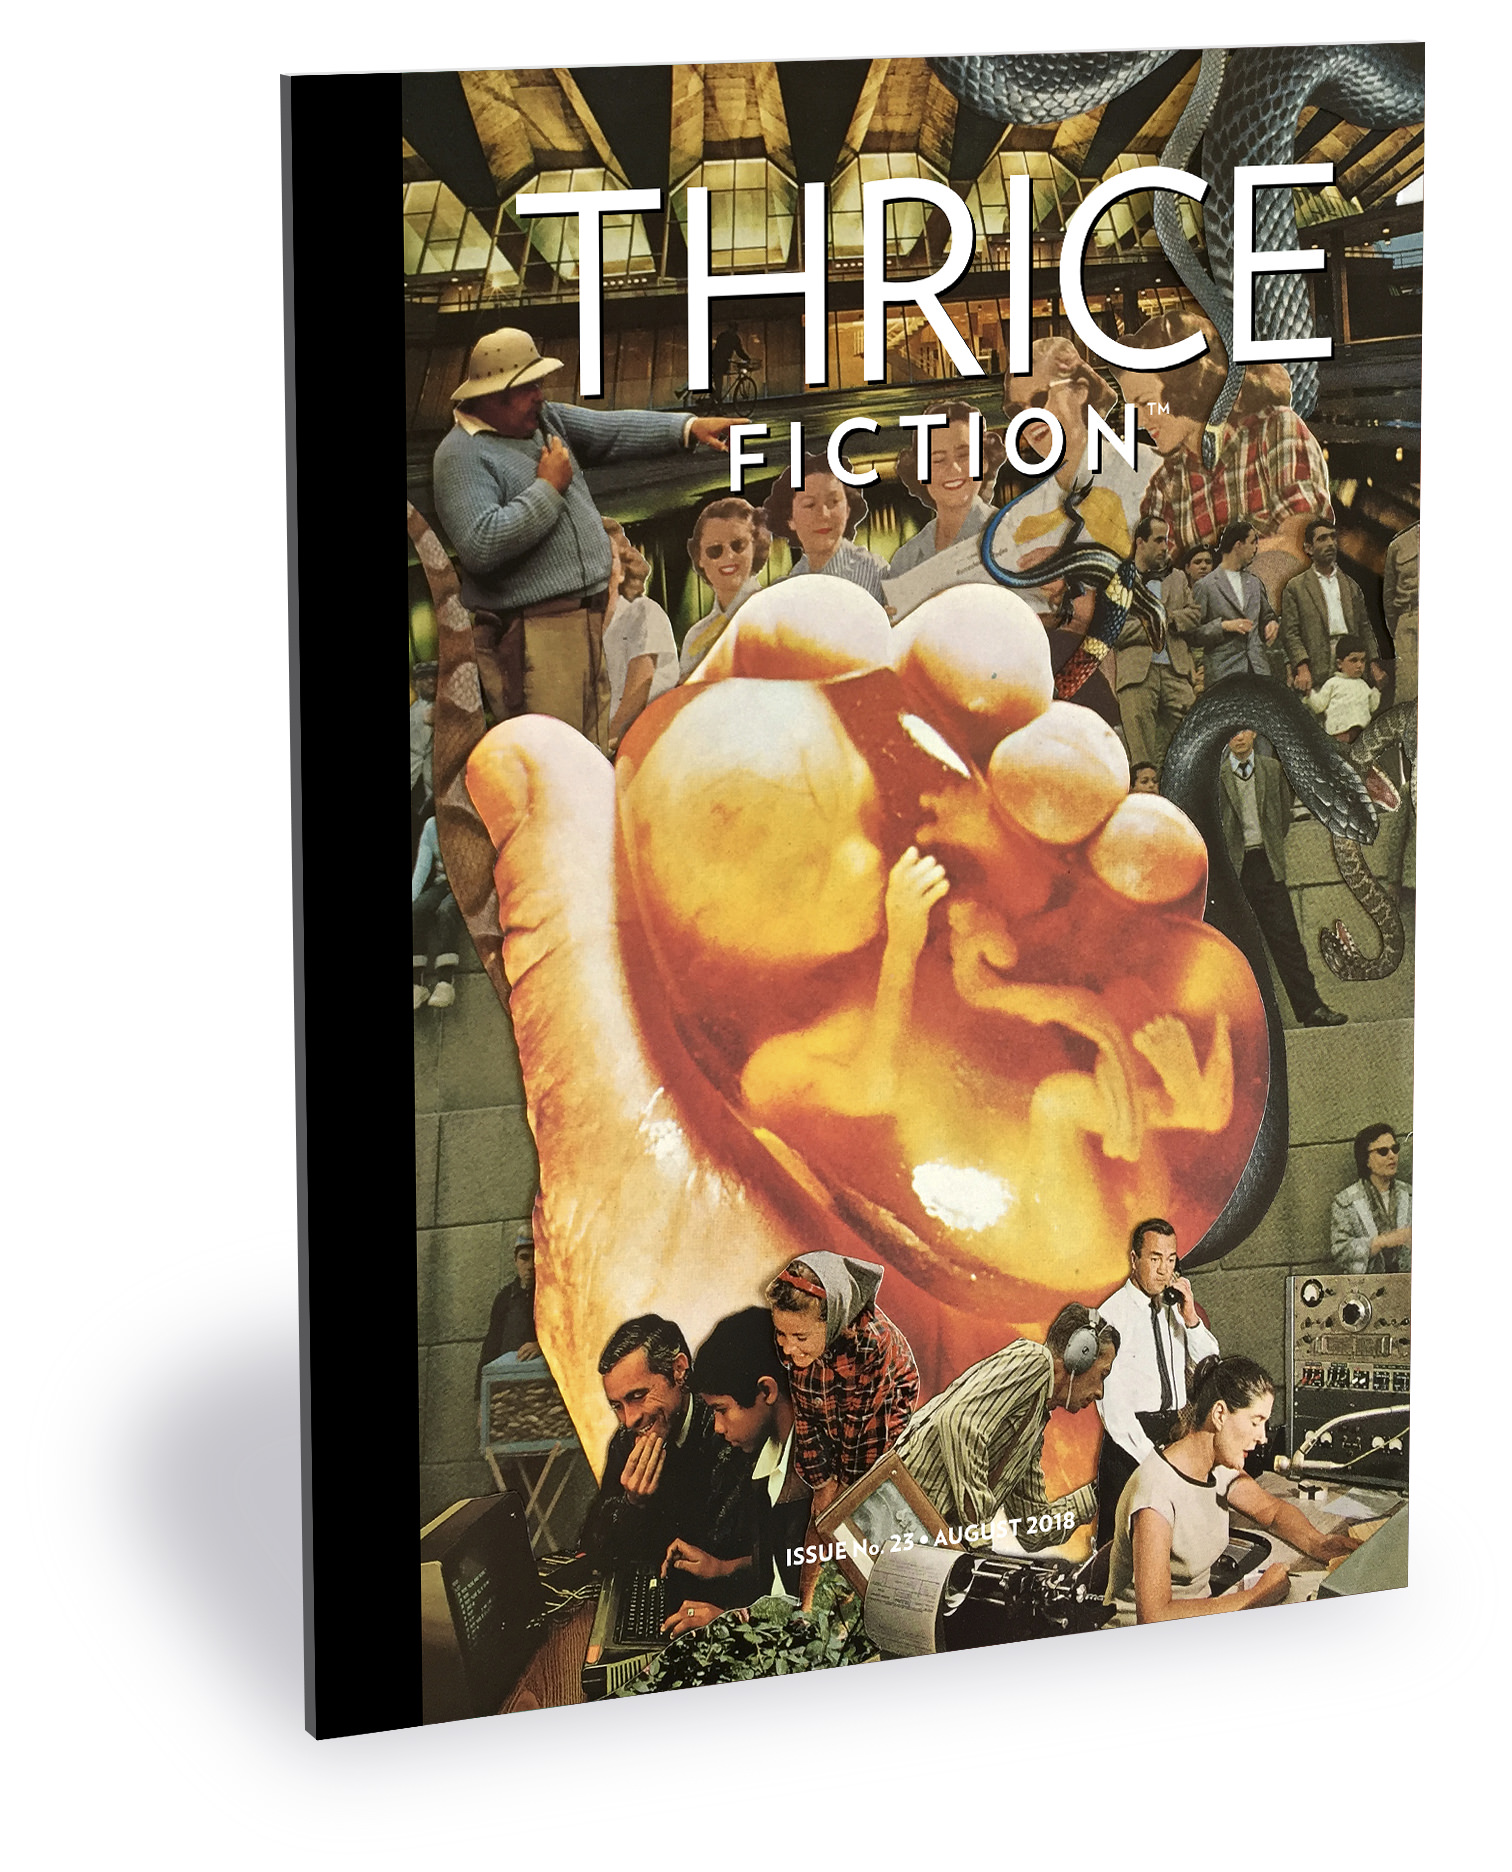 Thrice Fiction Magazine No. 23